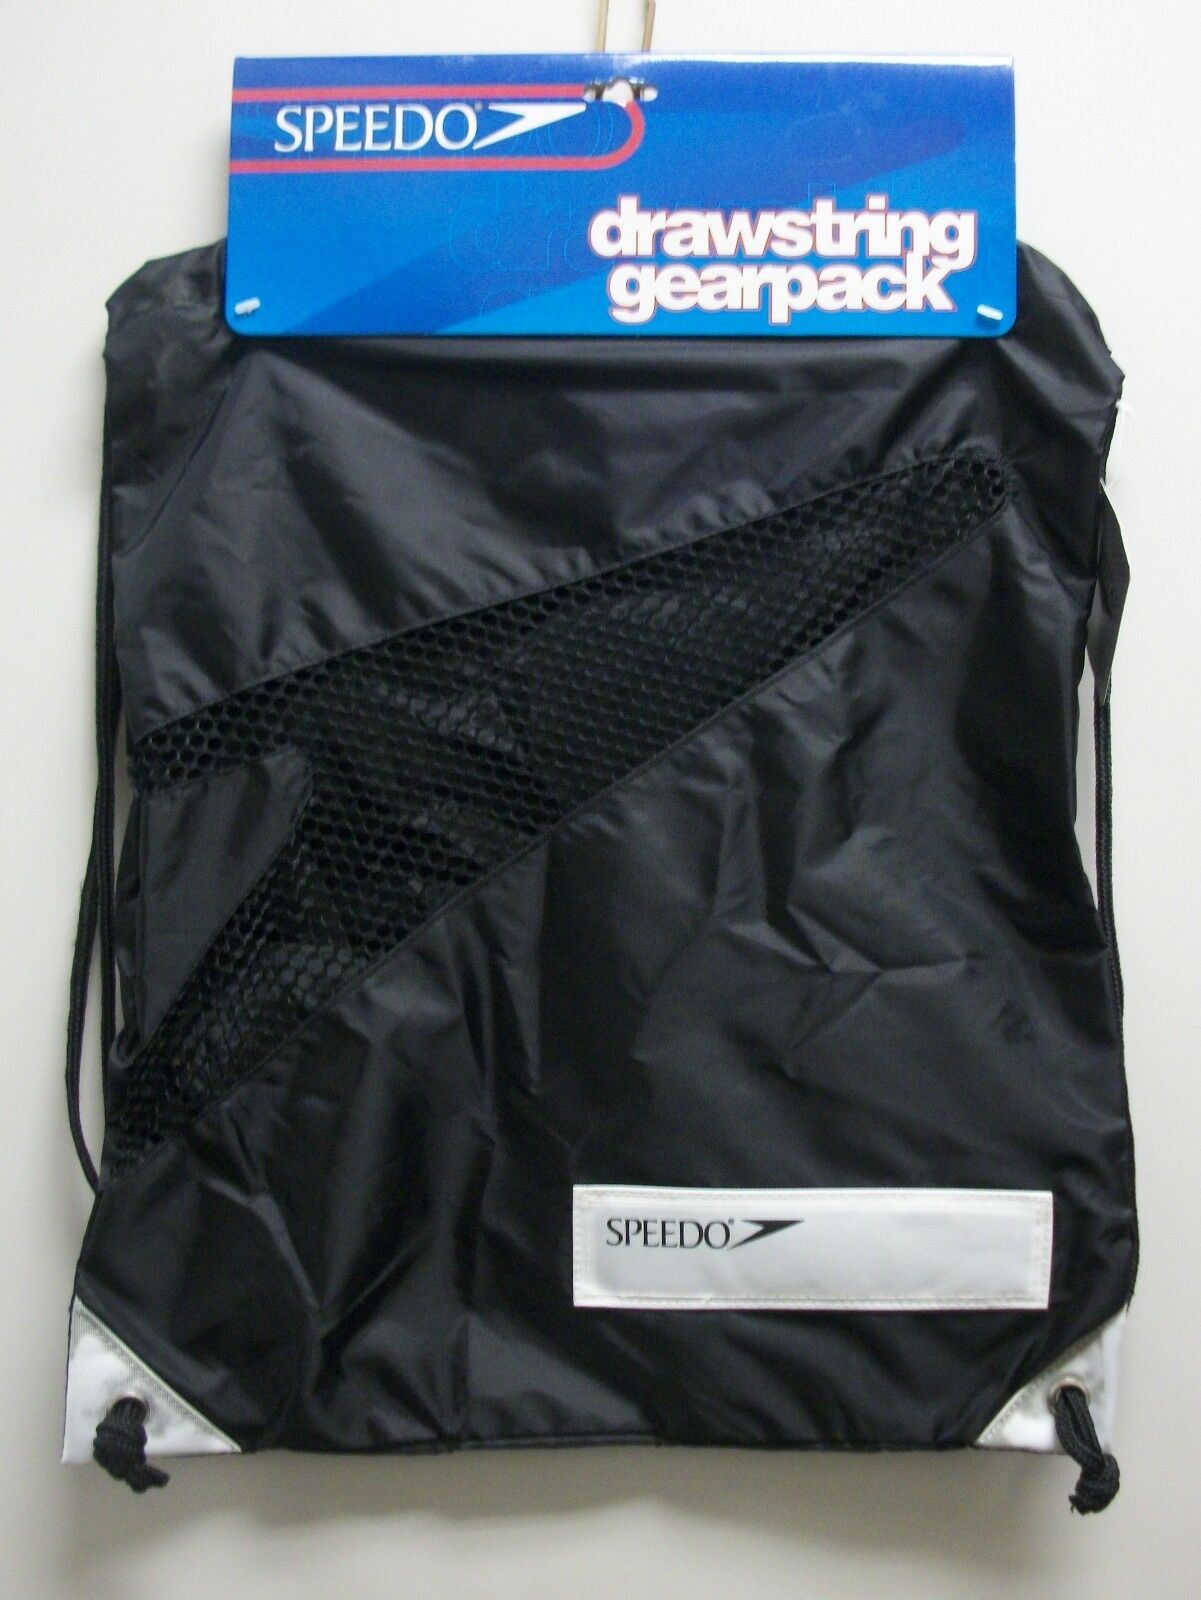 New Speedo Gearpack Drawstring Backpack Nylon Mesh Black Running Swimming Dive